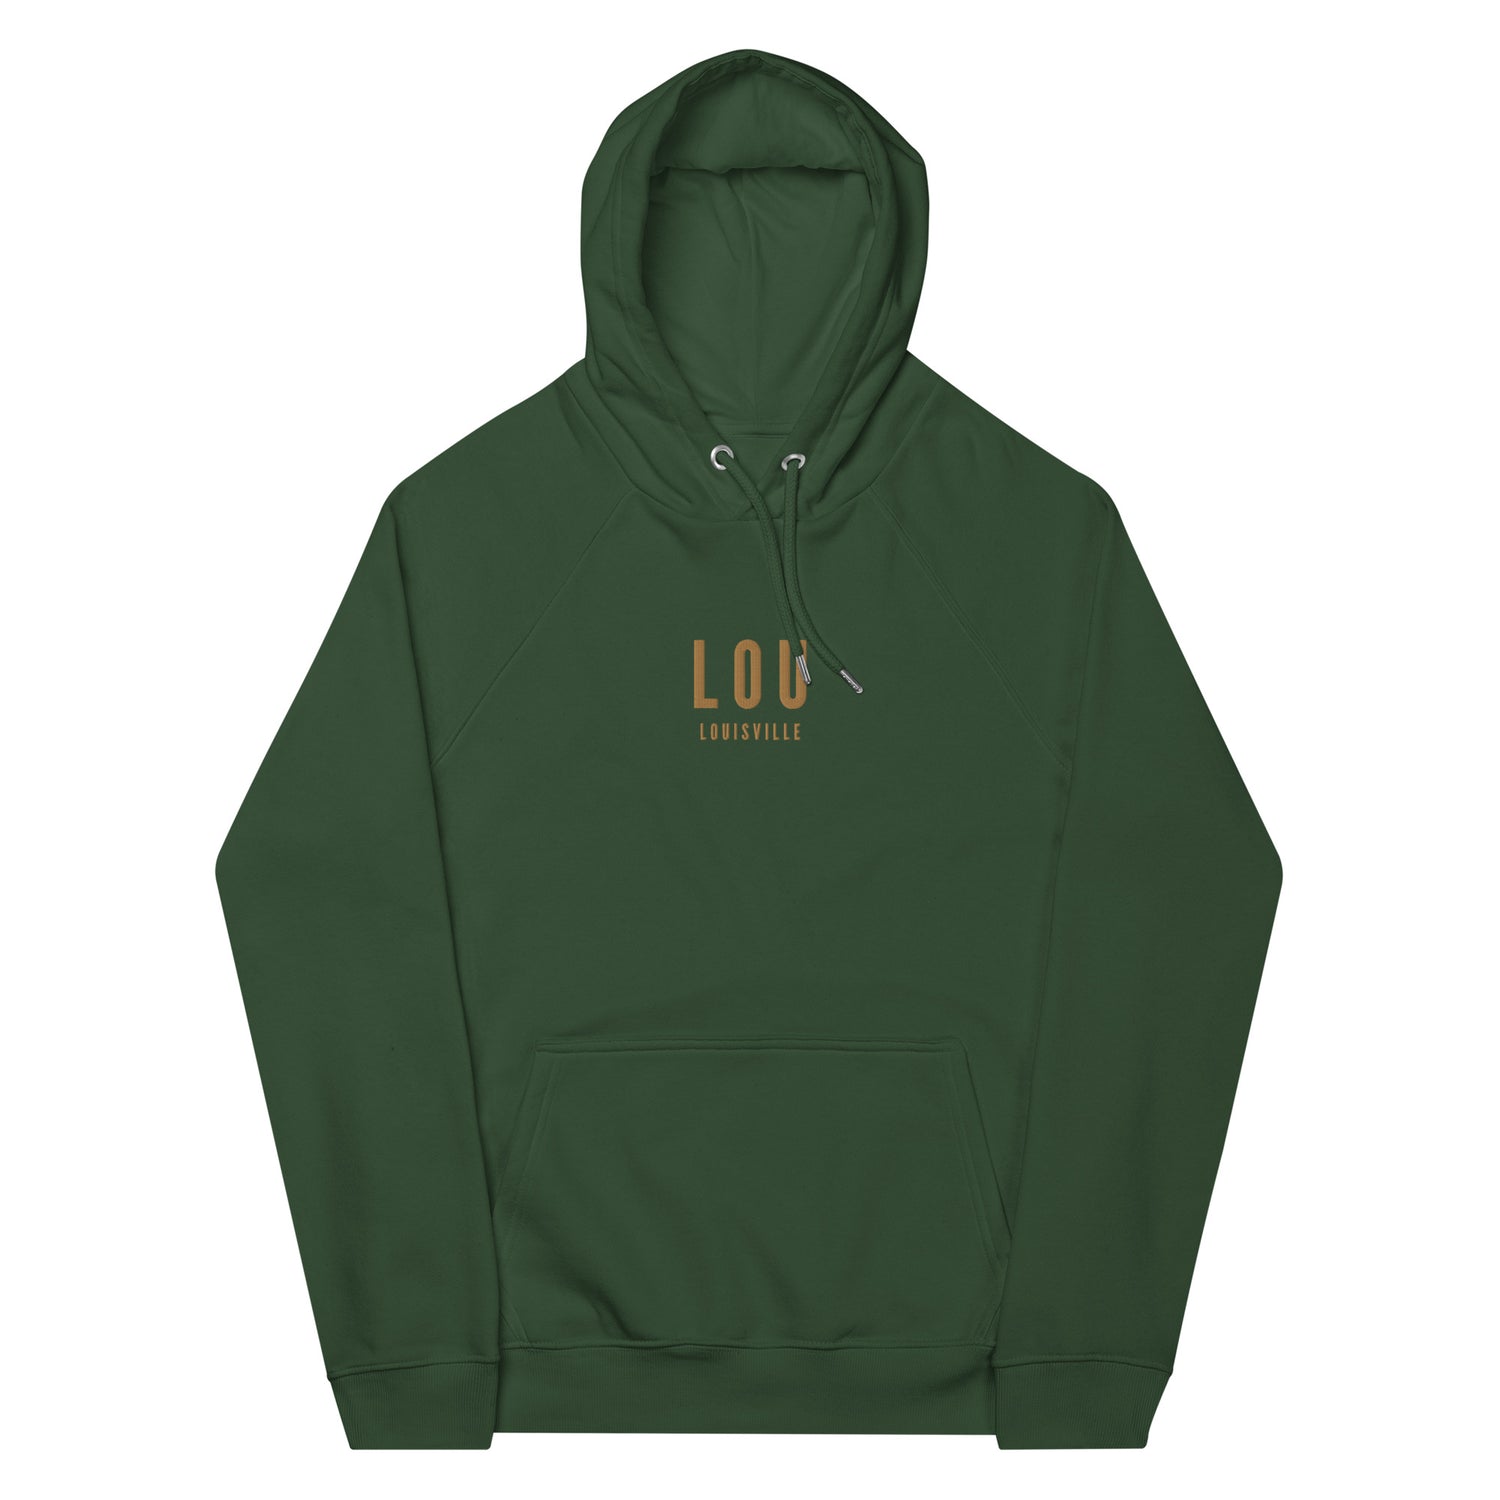 Louisville Kentucky Hoodies and Sweatshirts • LOU Airport Code